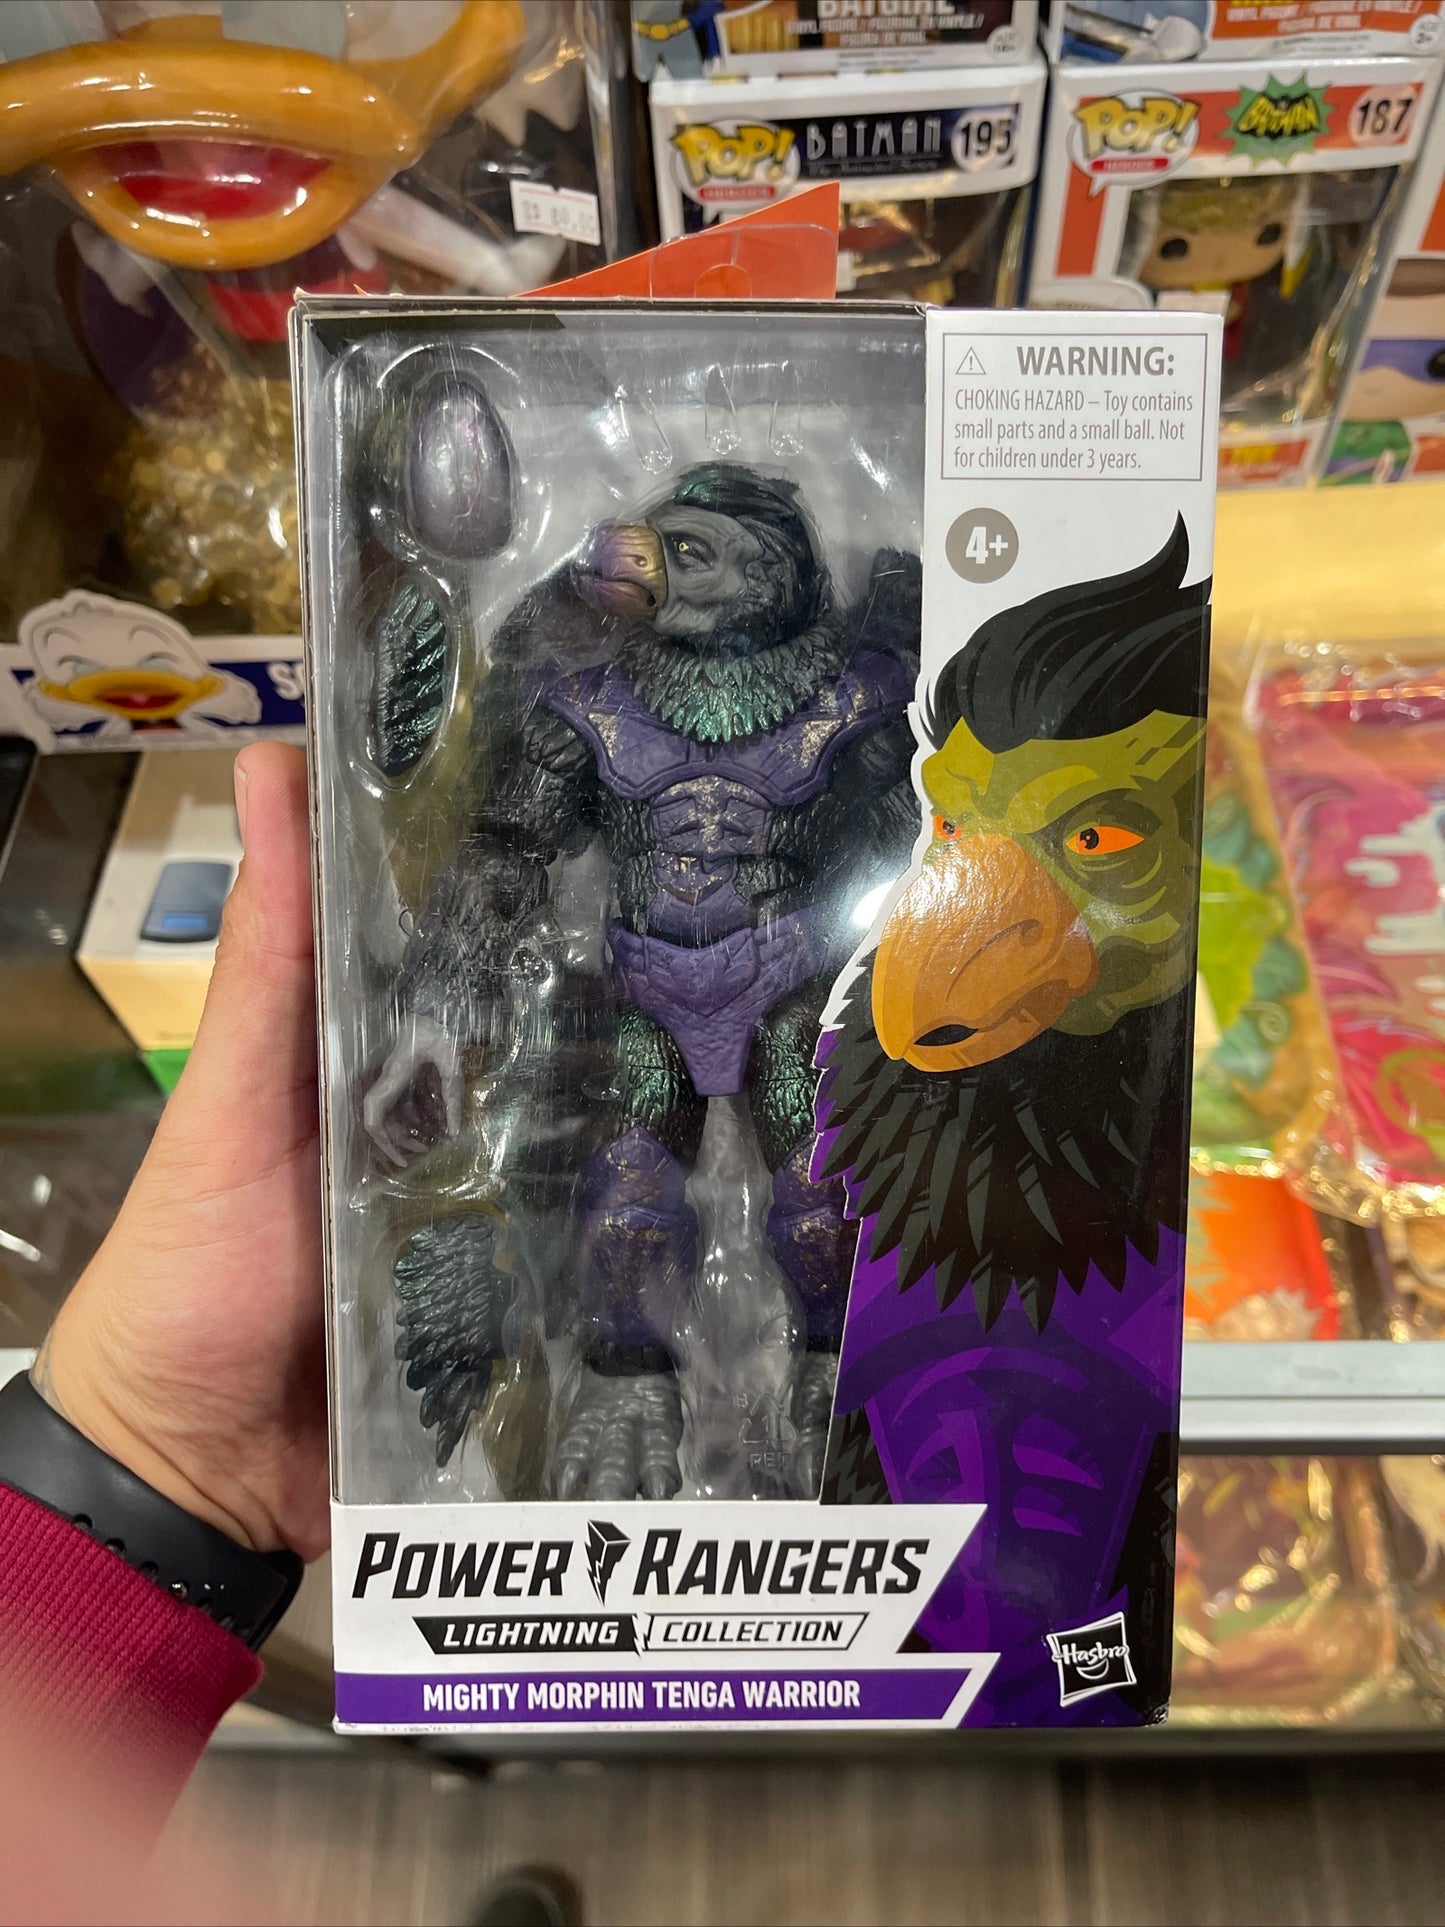 Power Rangers Lightning Collection "Mighty Morphin' Tenga Warrior" Action Figure